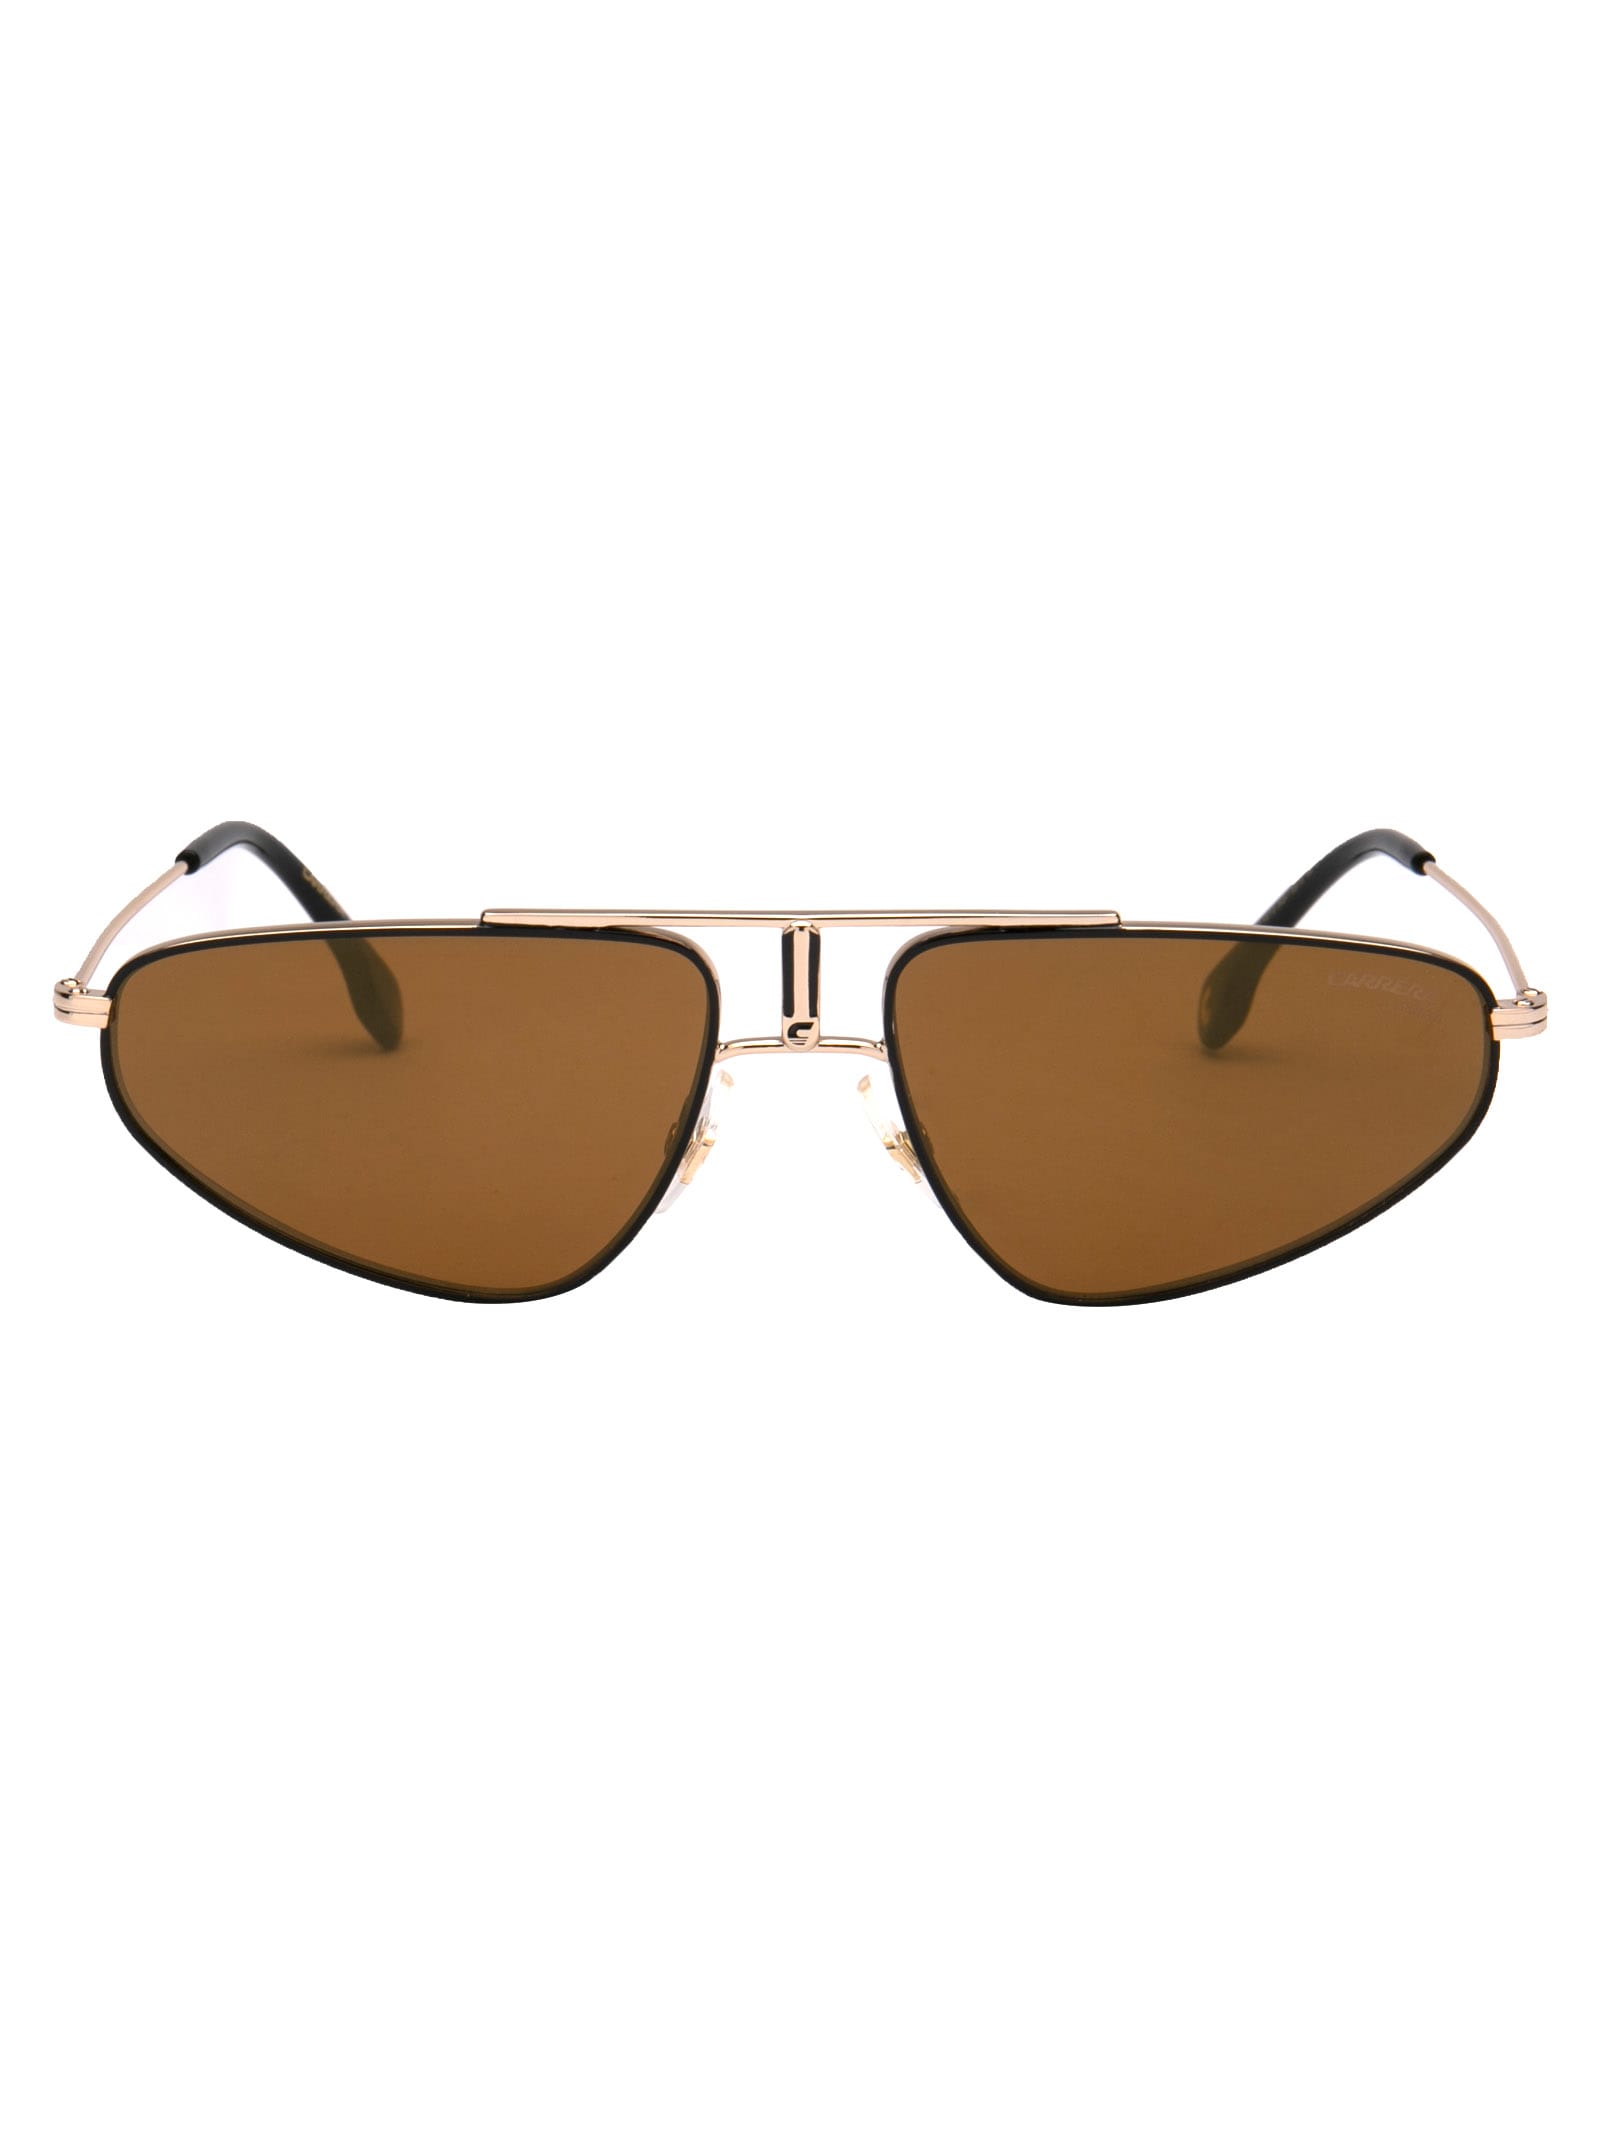 Carrera 1021/s Sunglasses